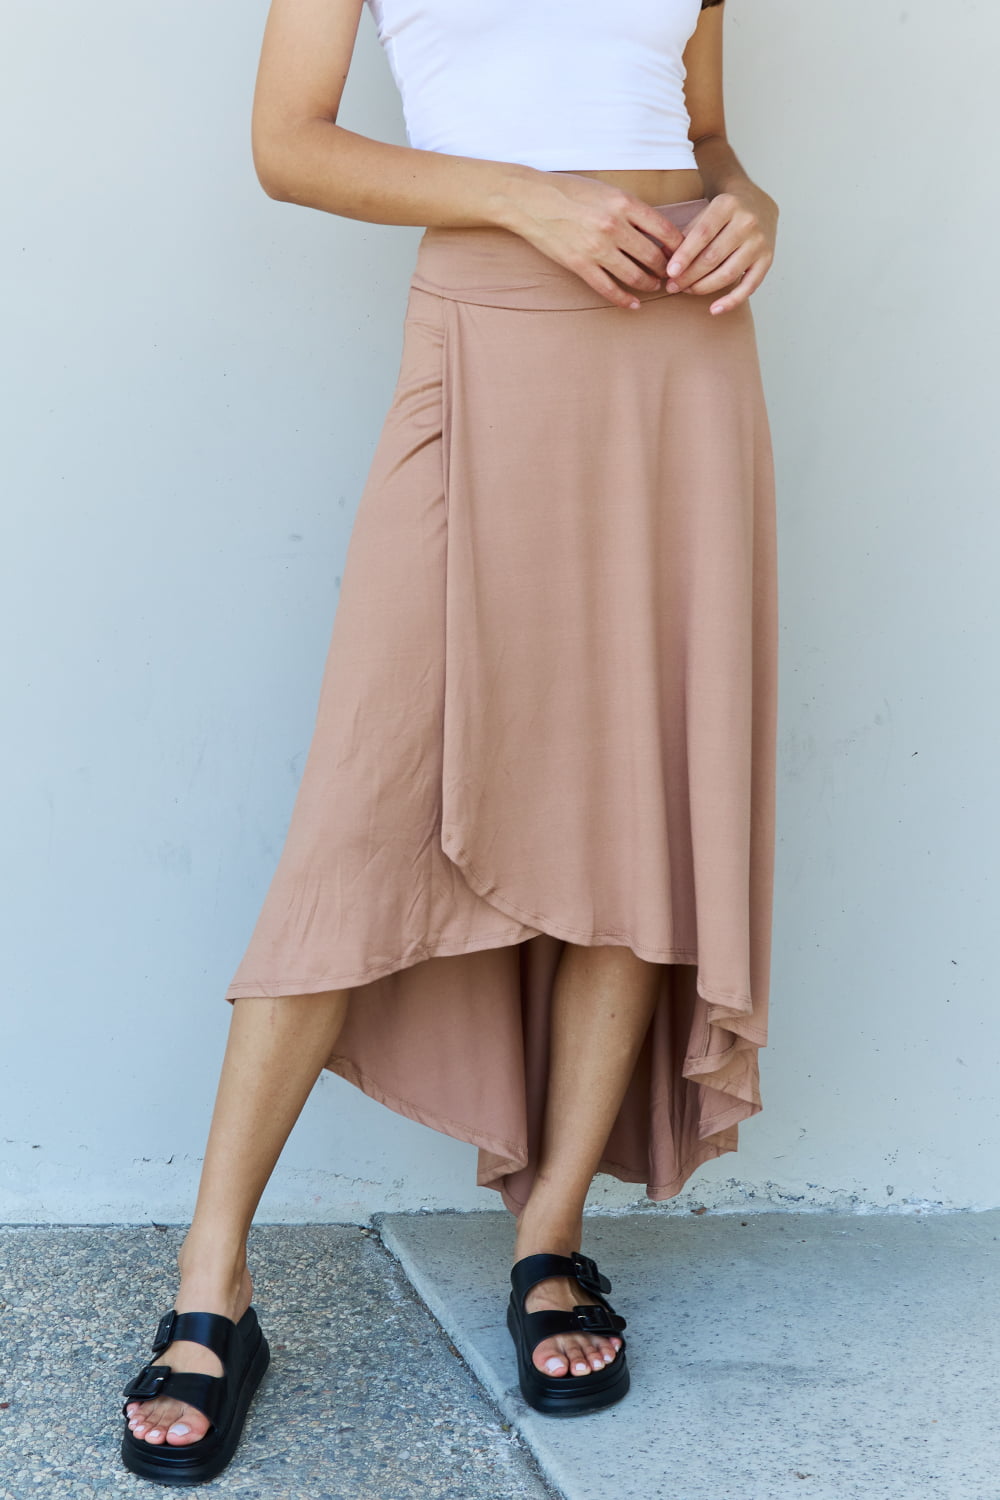 Ninexis First Choice High Waisted Flare Maxi Skirt in Camel - Tigbul's Fashion